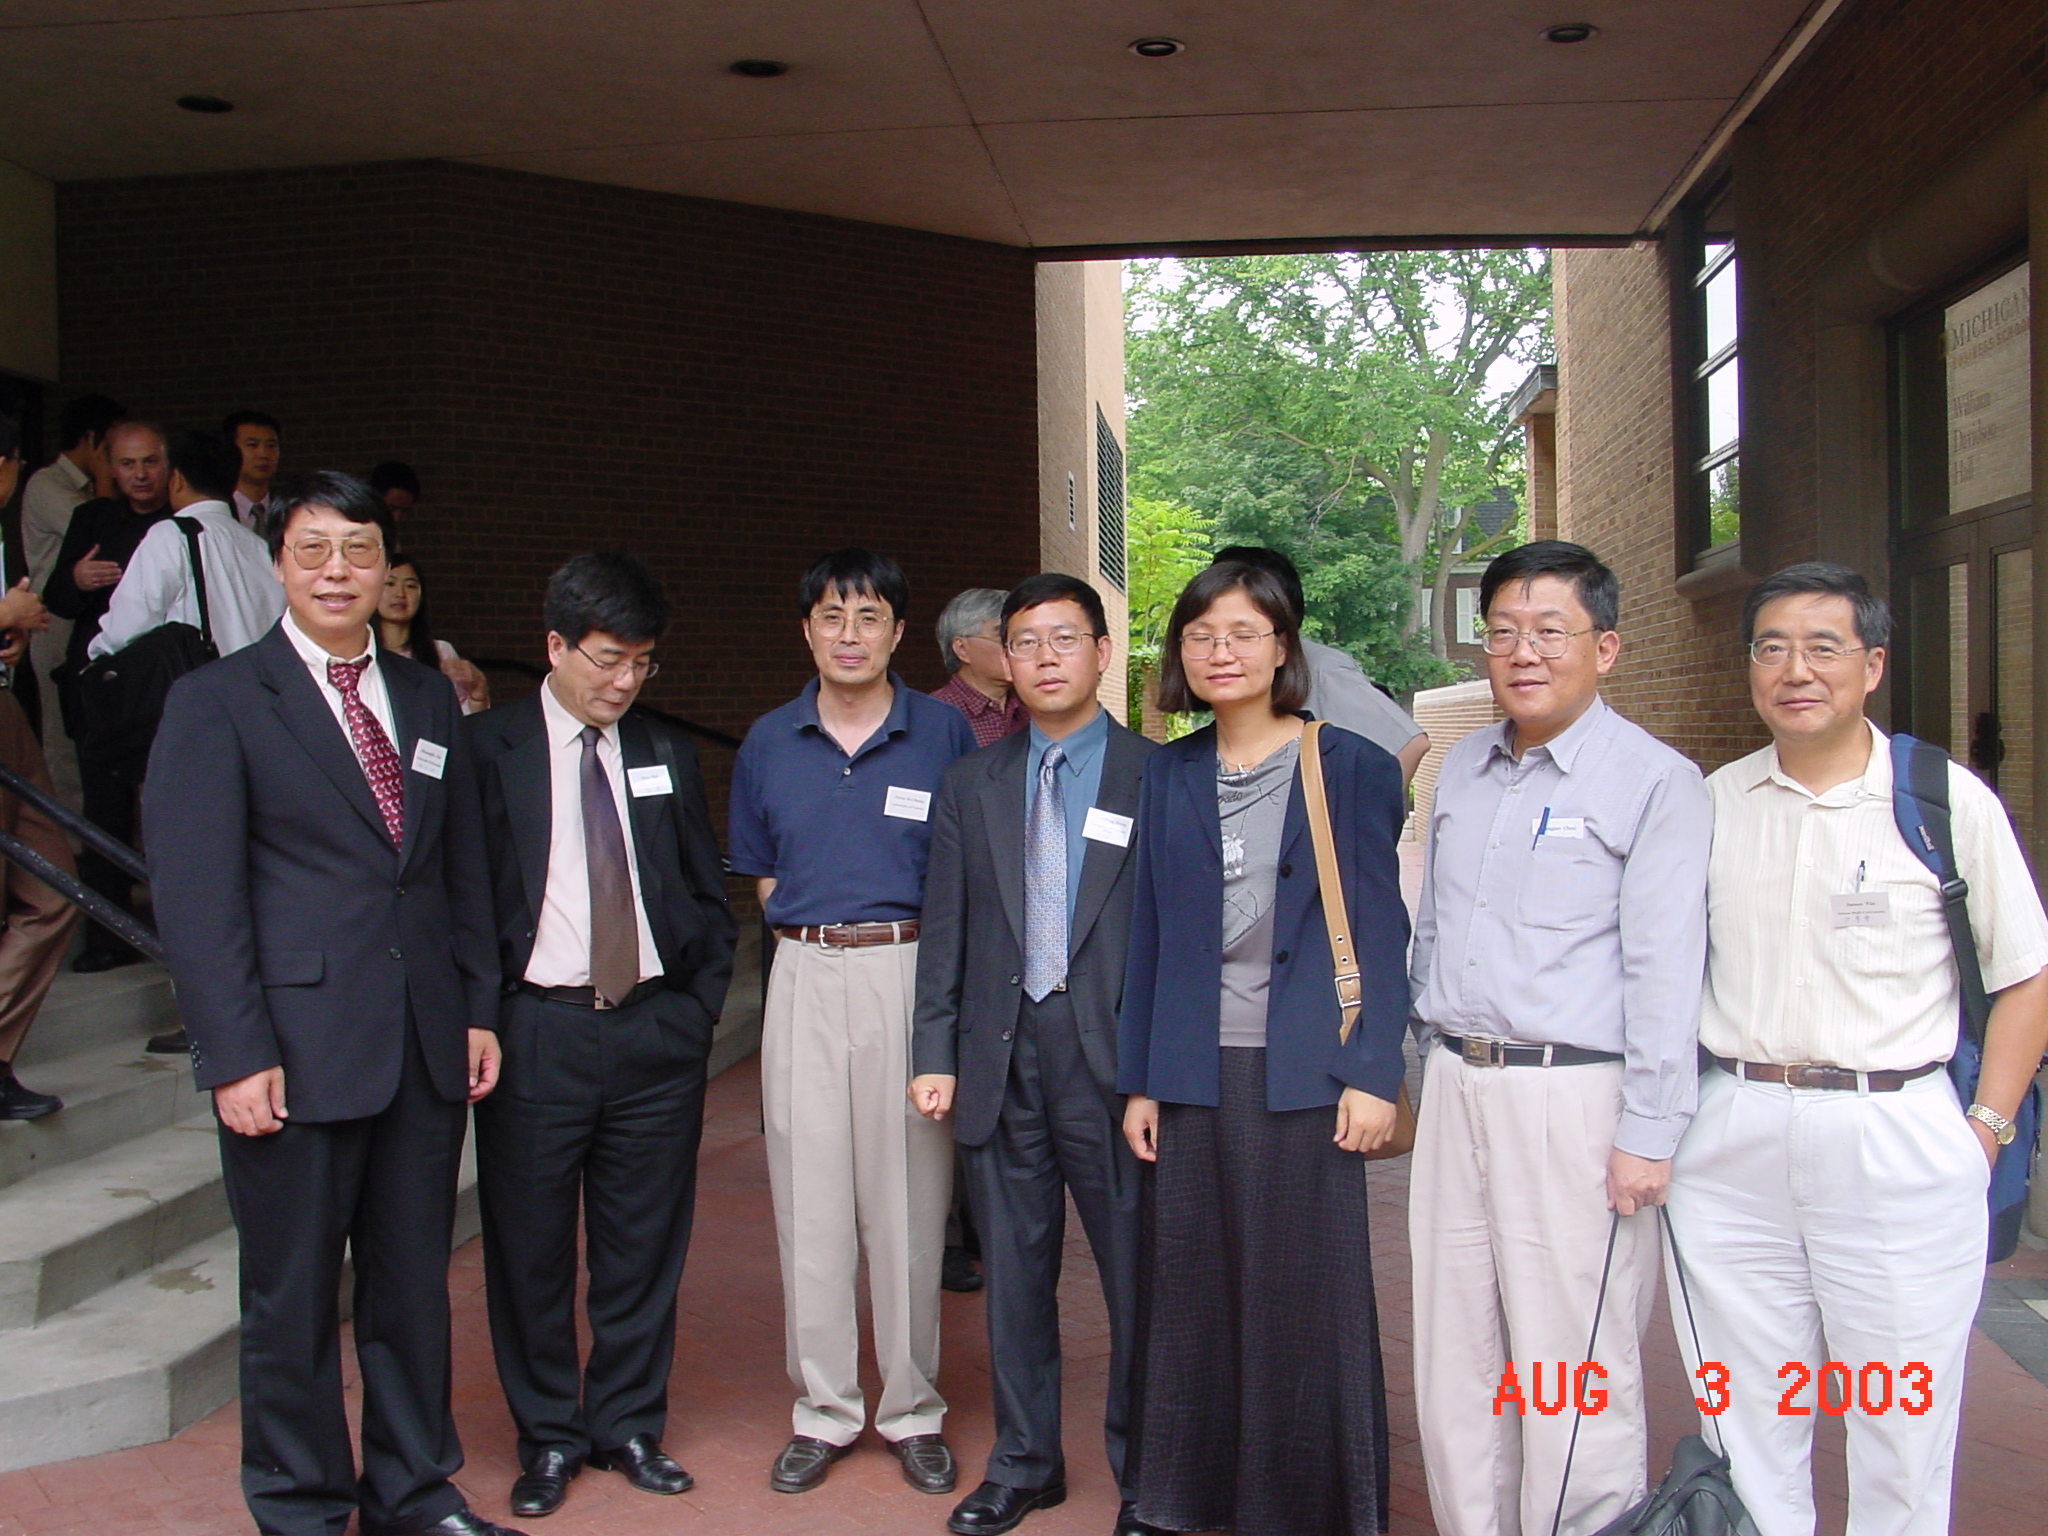 Professor Haizheng Li, CES Immediate past President, was appreciated for his contribution